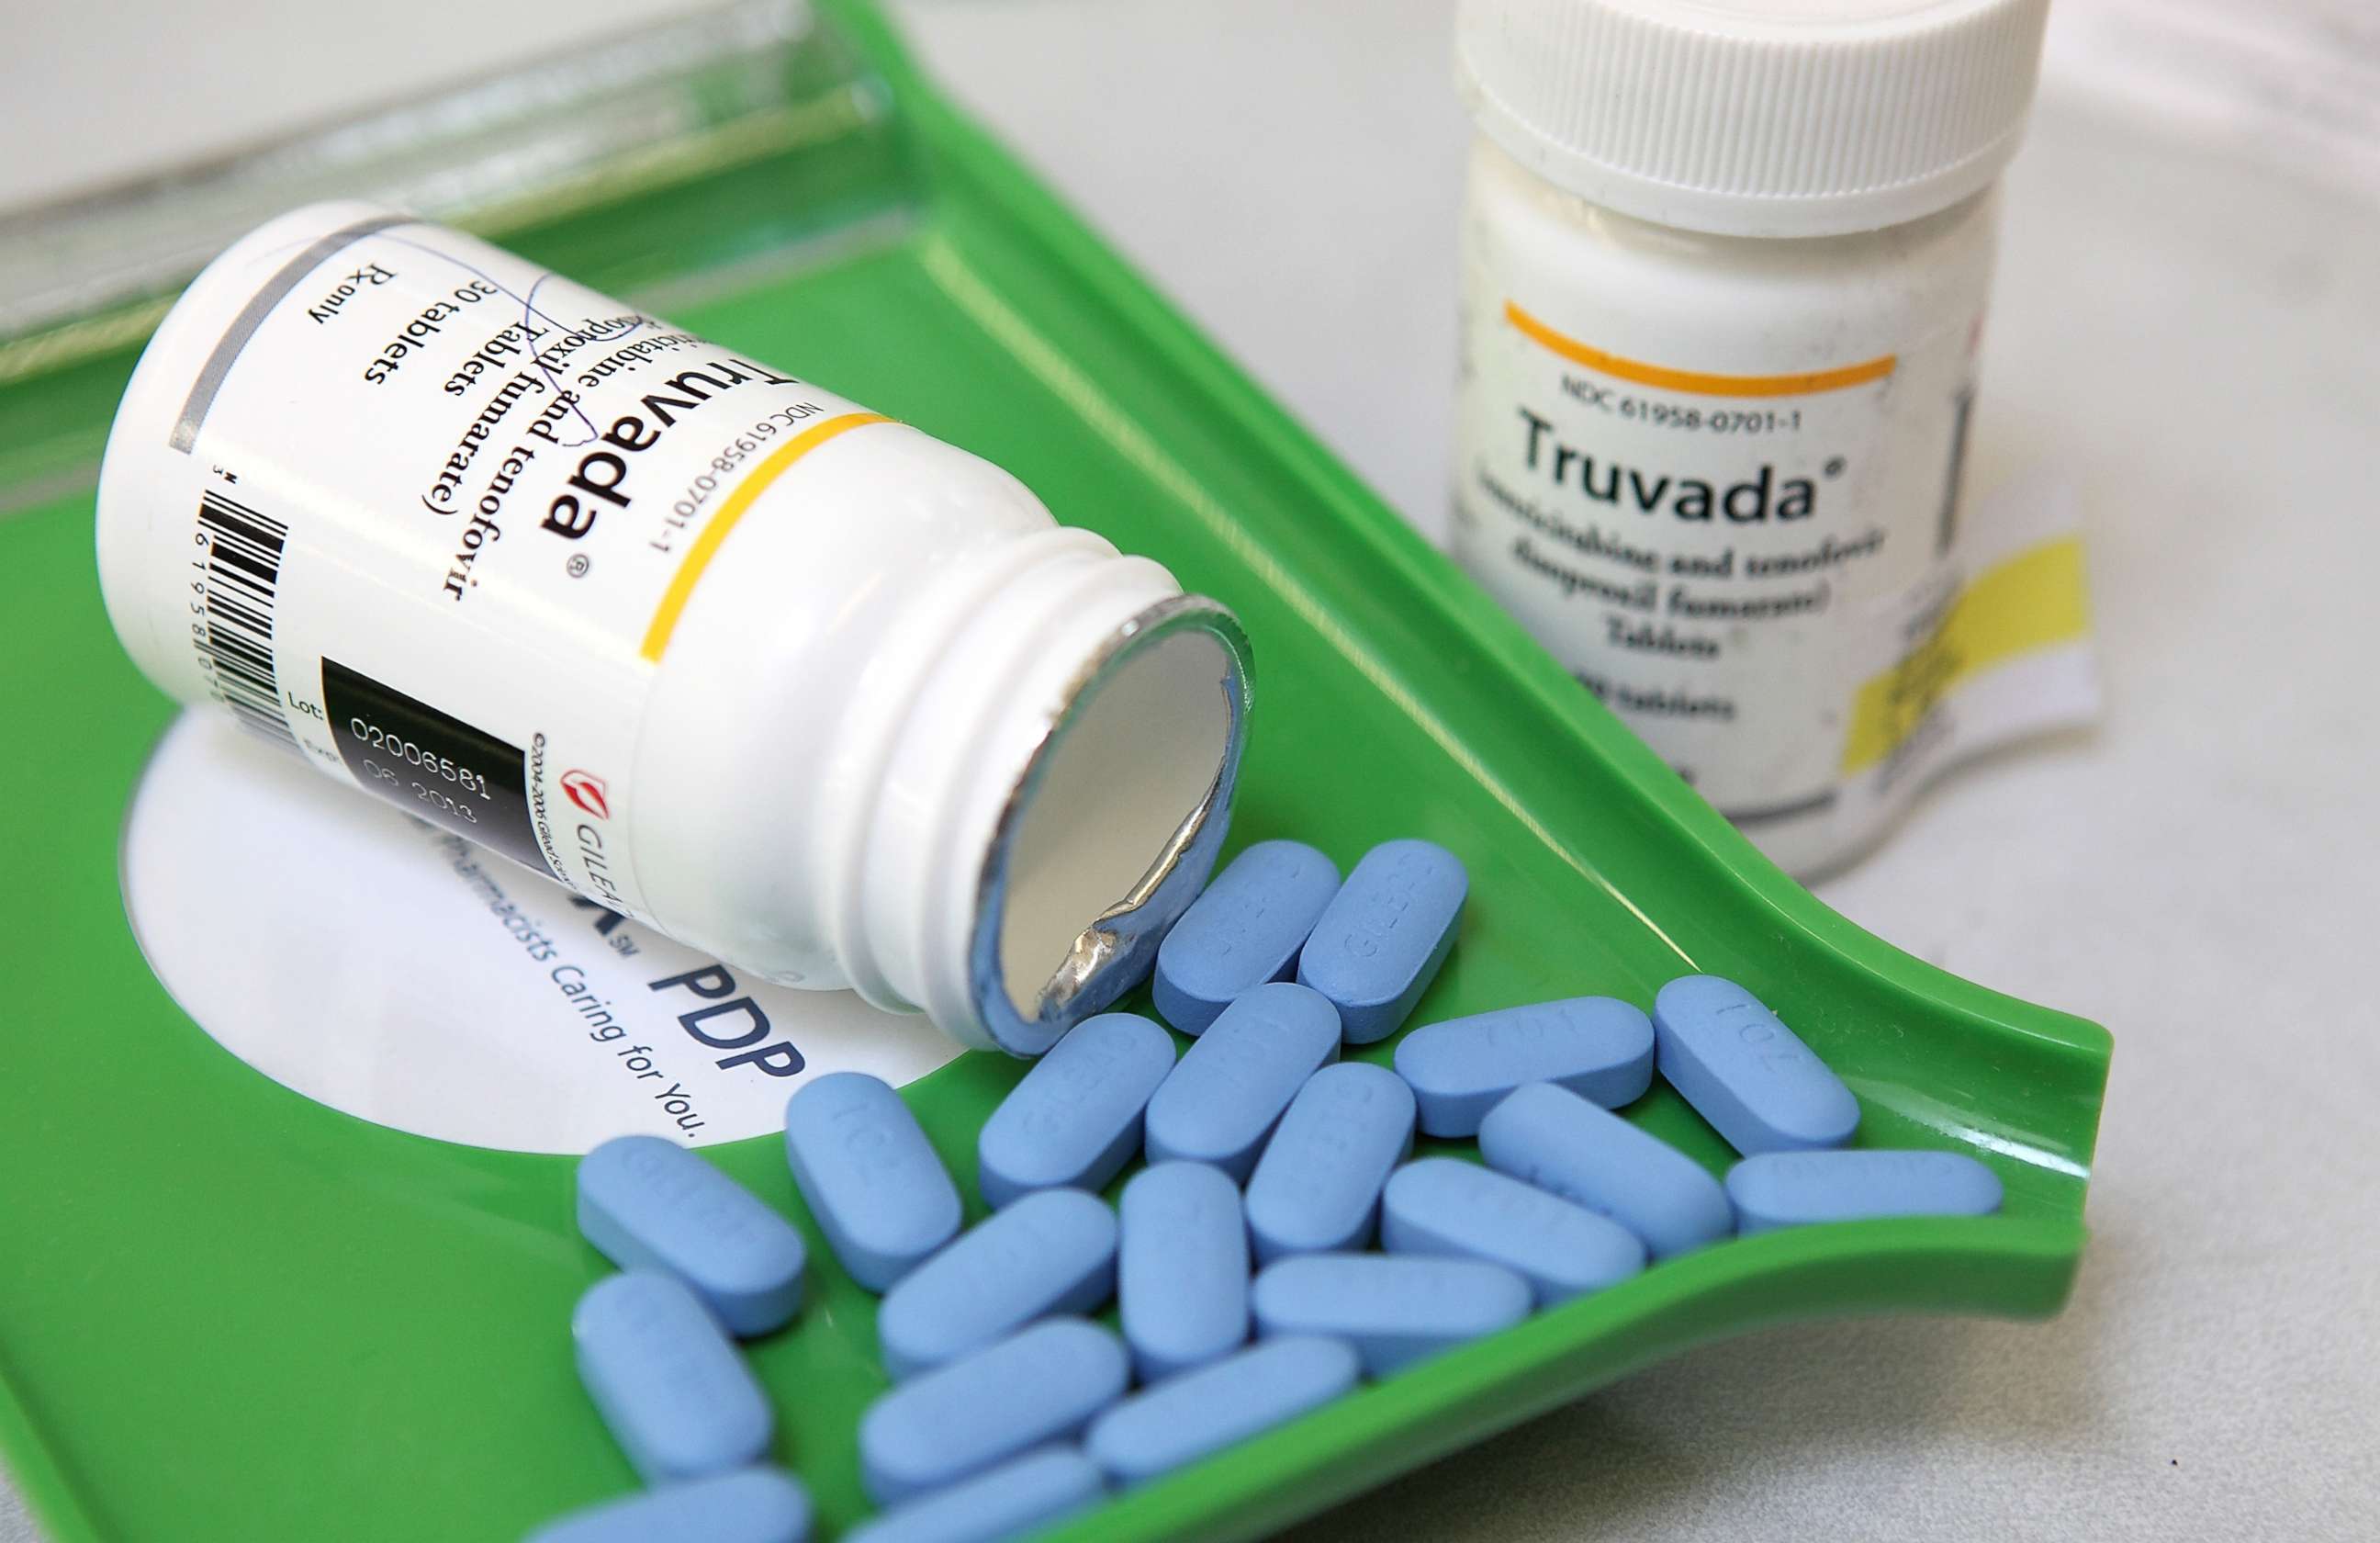 PHOTO: Bottles of antiretroviral drug Truvada are displayed at a pharmacy on Nov. 23, 2010 in San Anselmo, Calif.